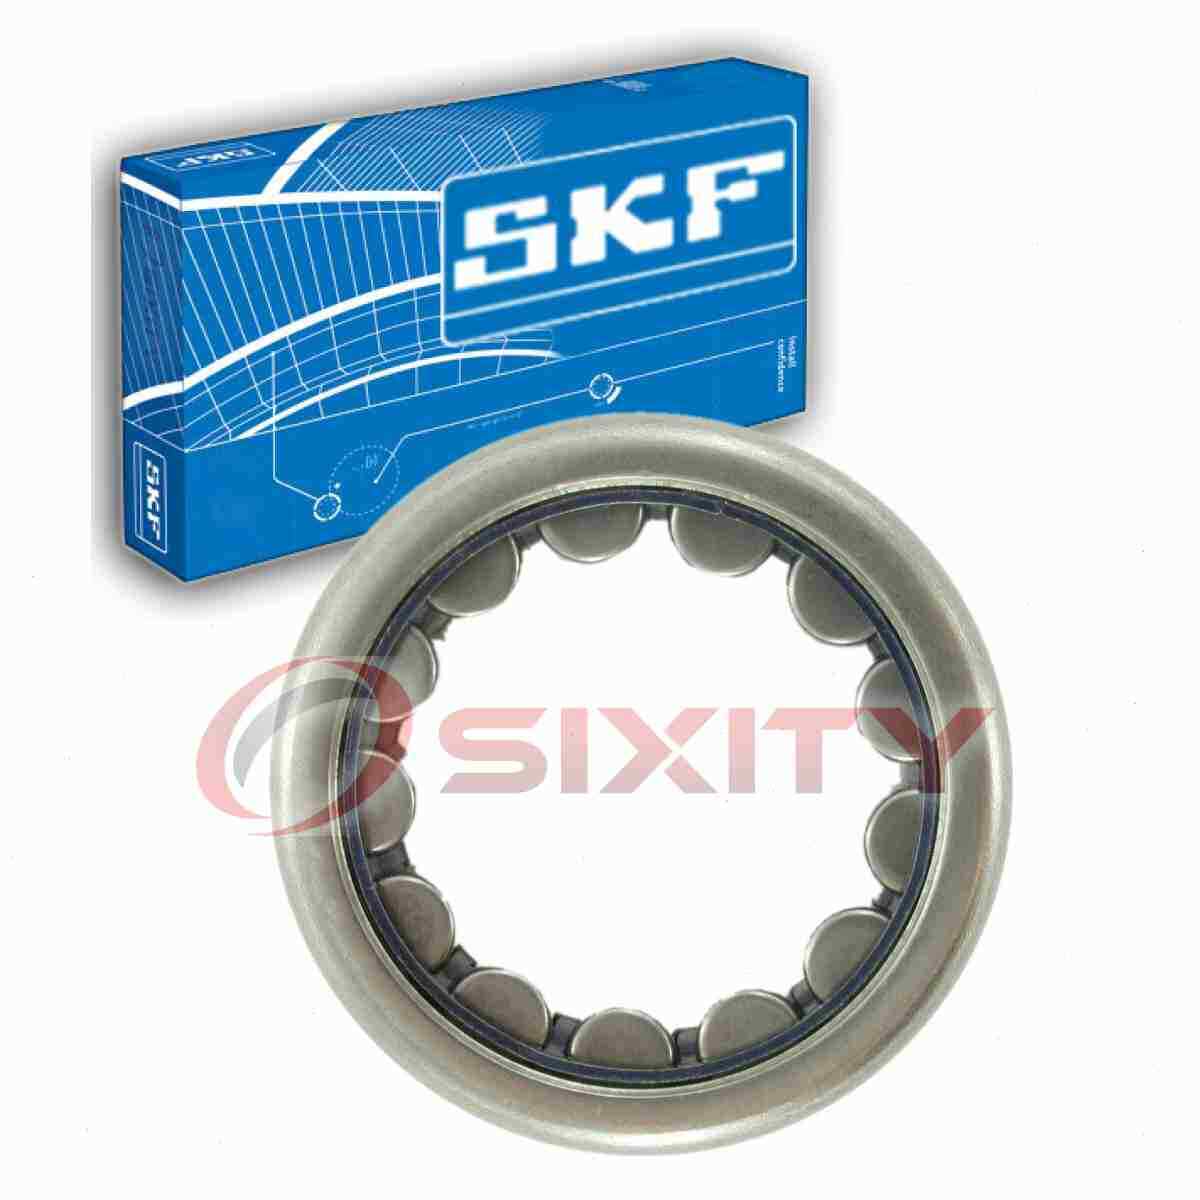 SKF Rear Wheel Bearing for 1975-1987 Oldsmobile Cutlass Supreme Axle vo